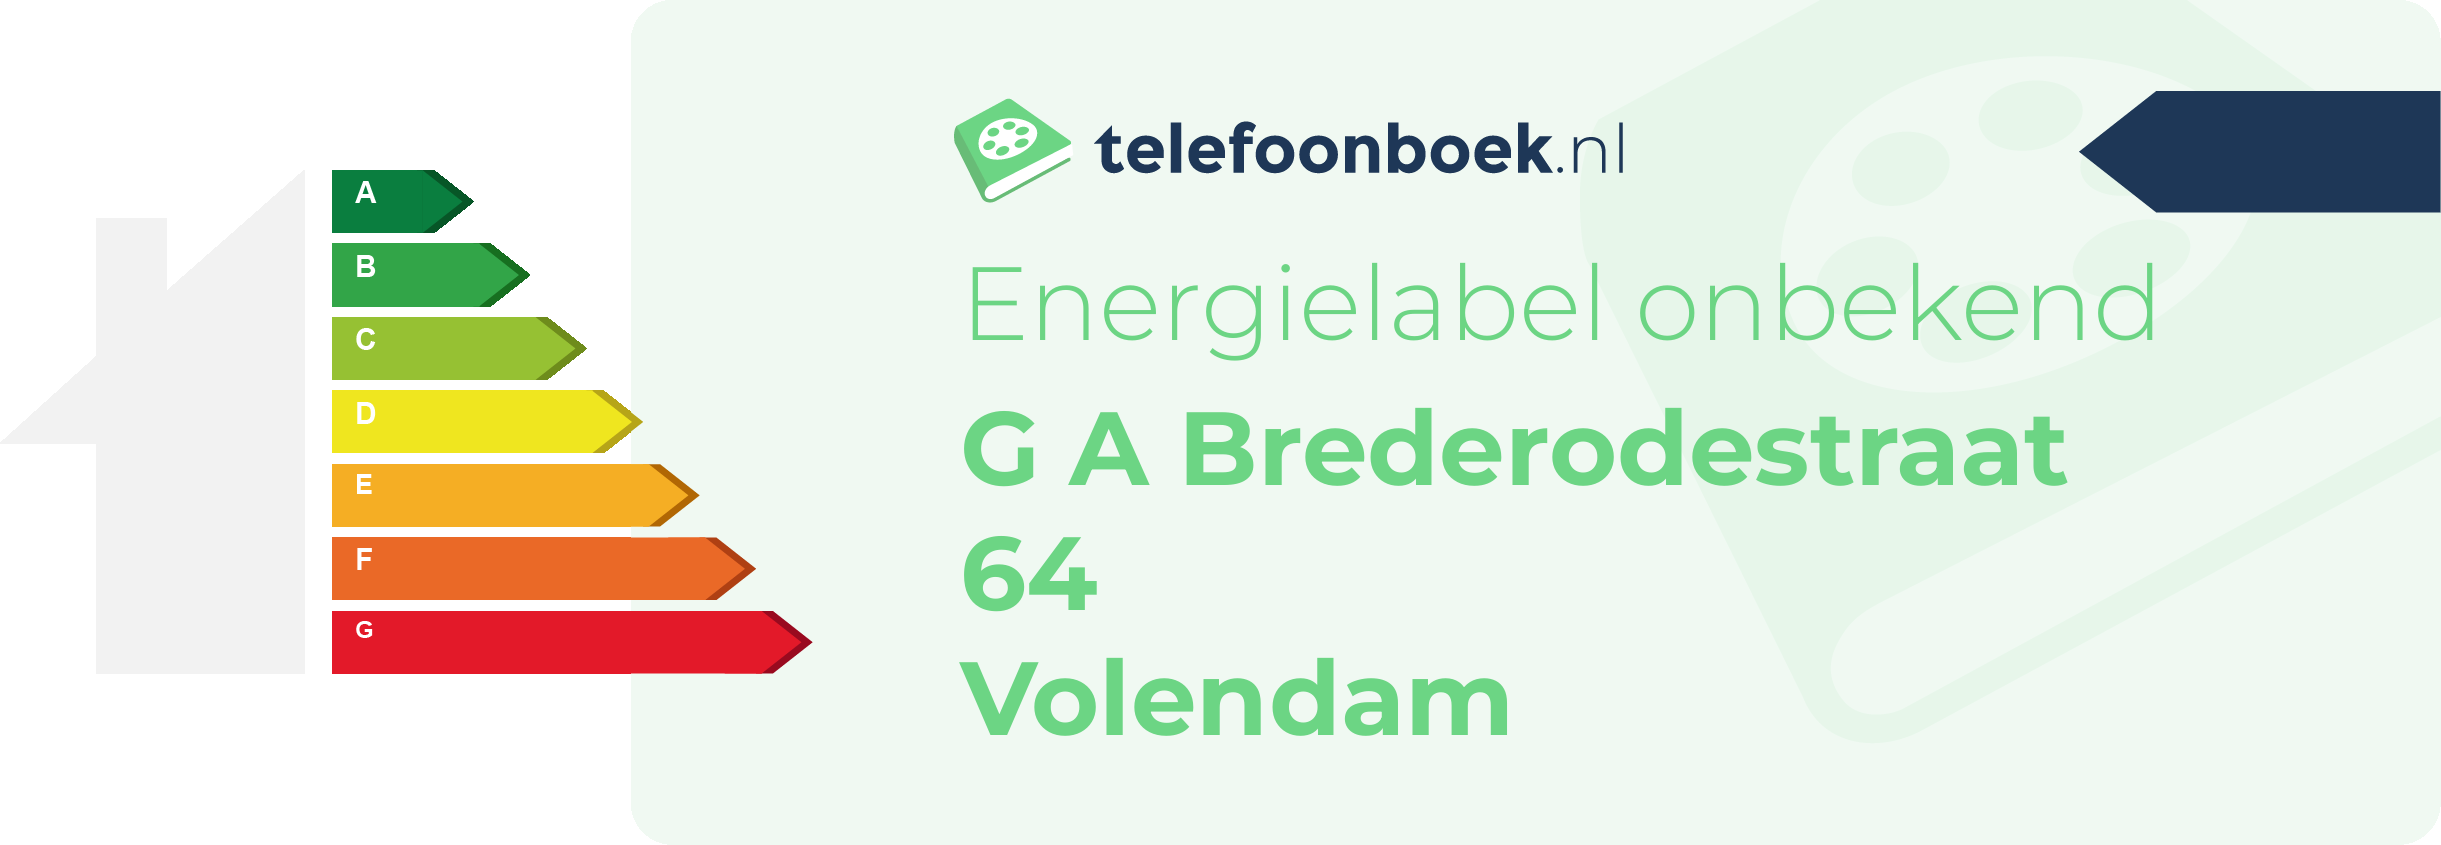 Energielabel G A Brederodestraat 64 Volendam